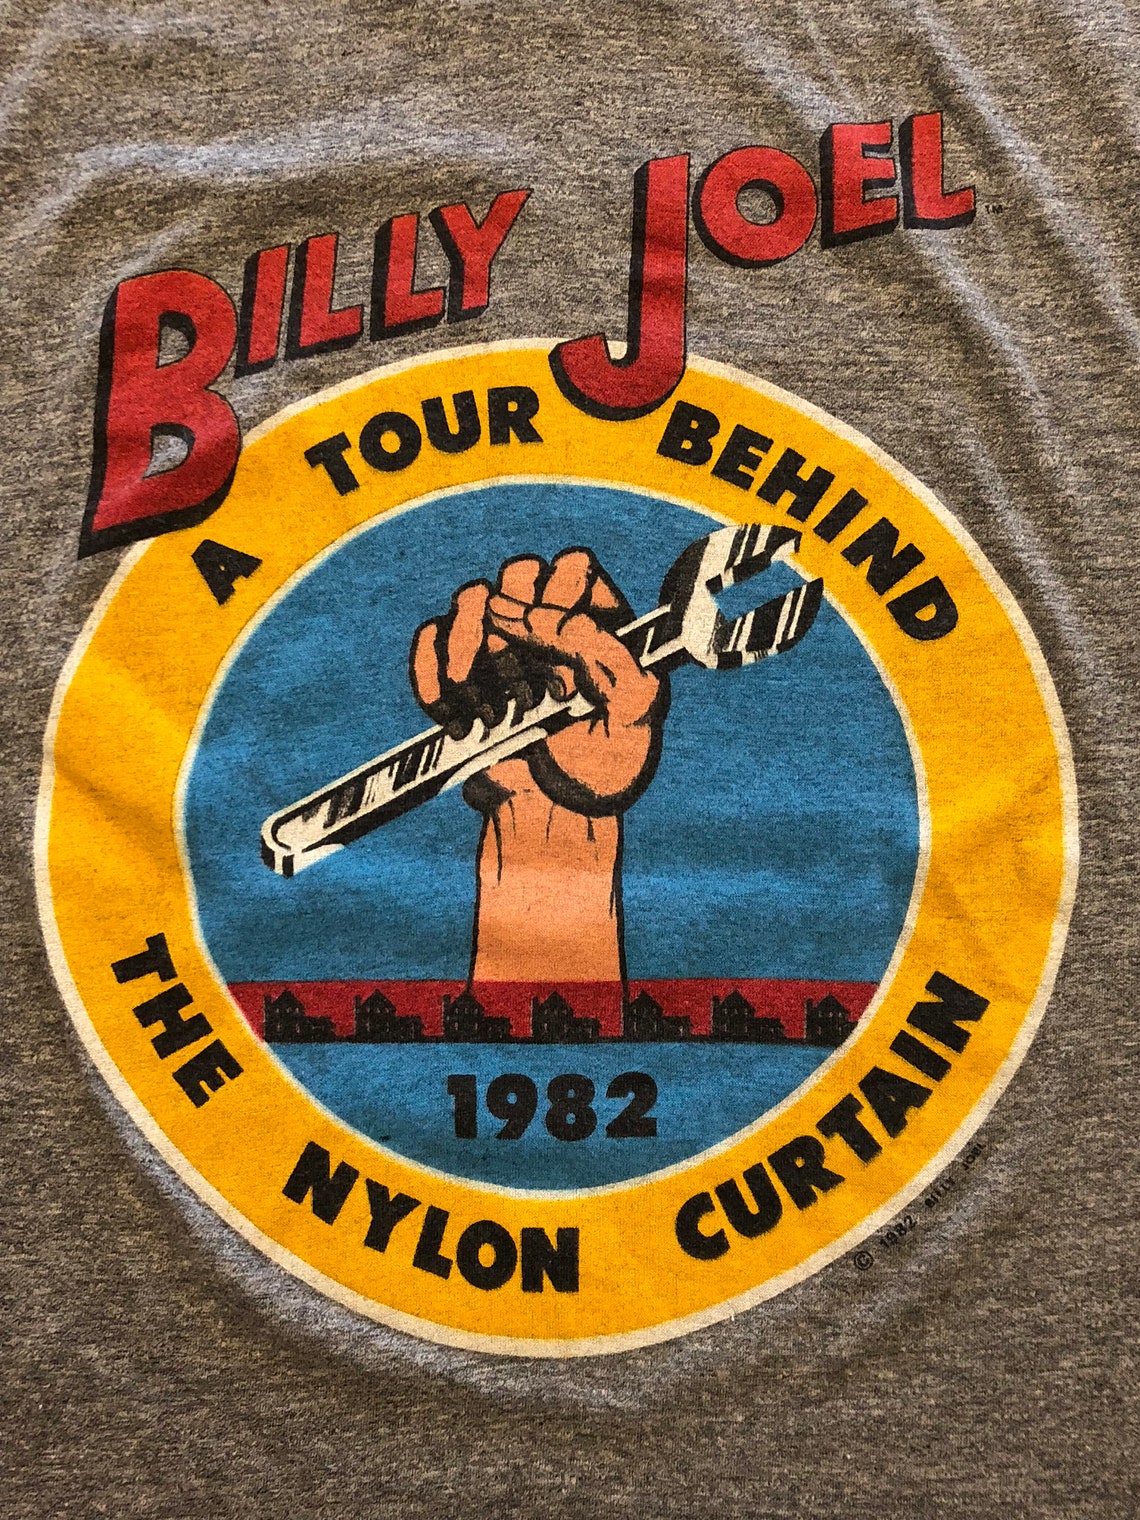 billy joel tour shirt